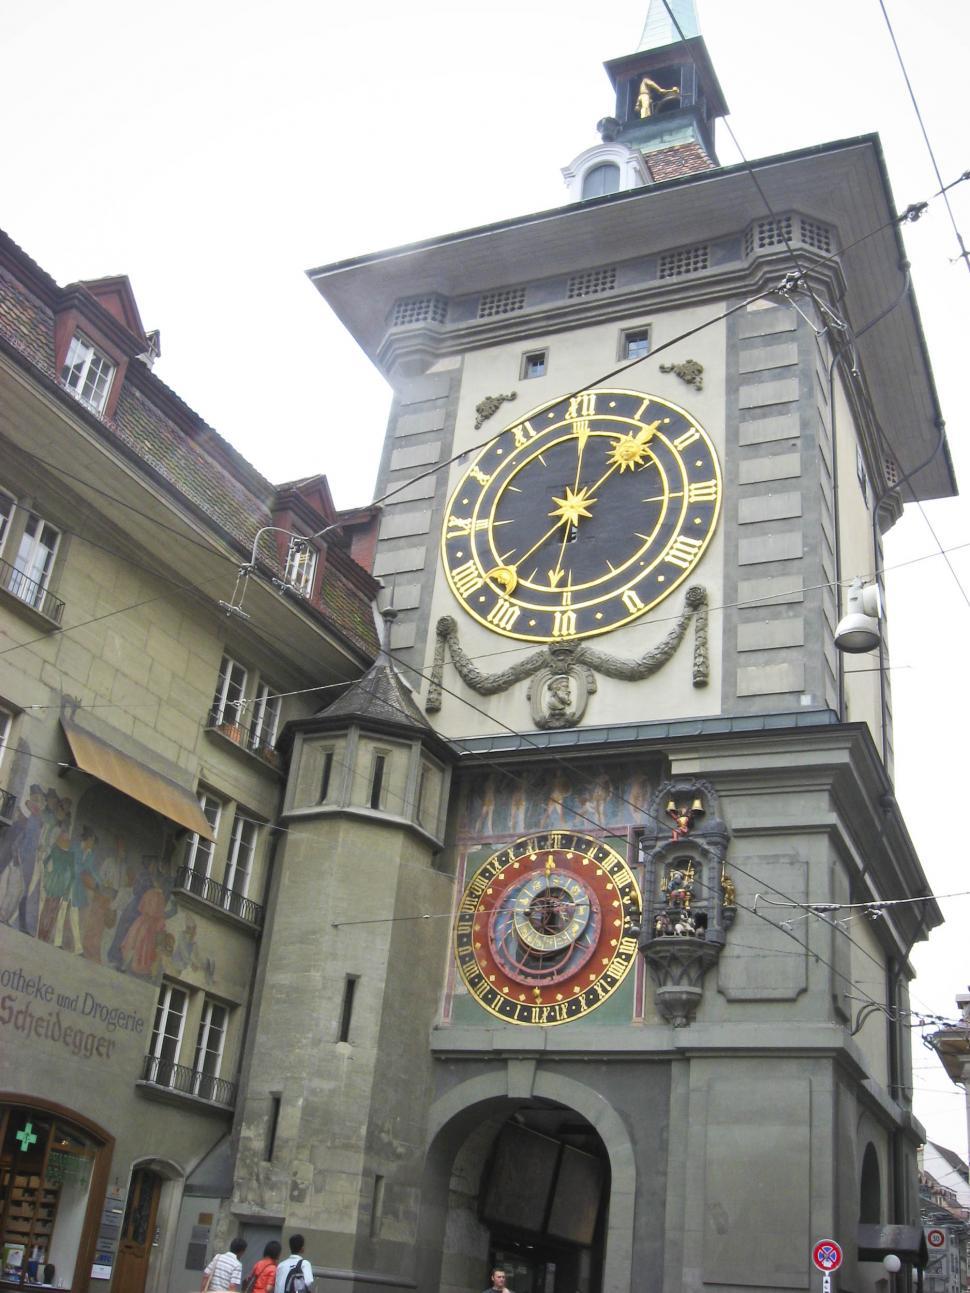 Free Image of Clock face in Bern, Switzerland 